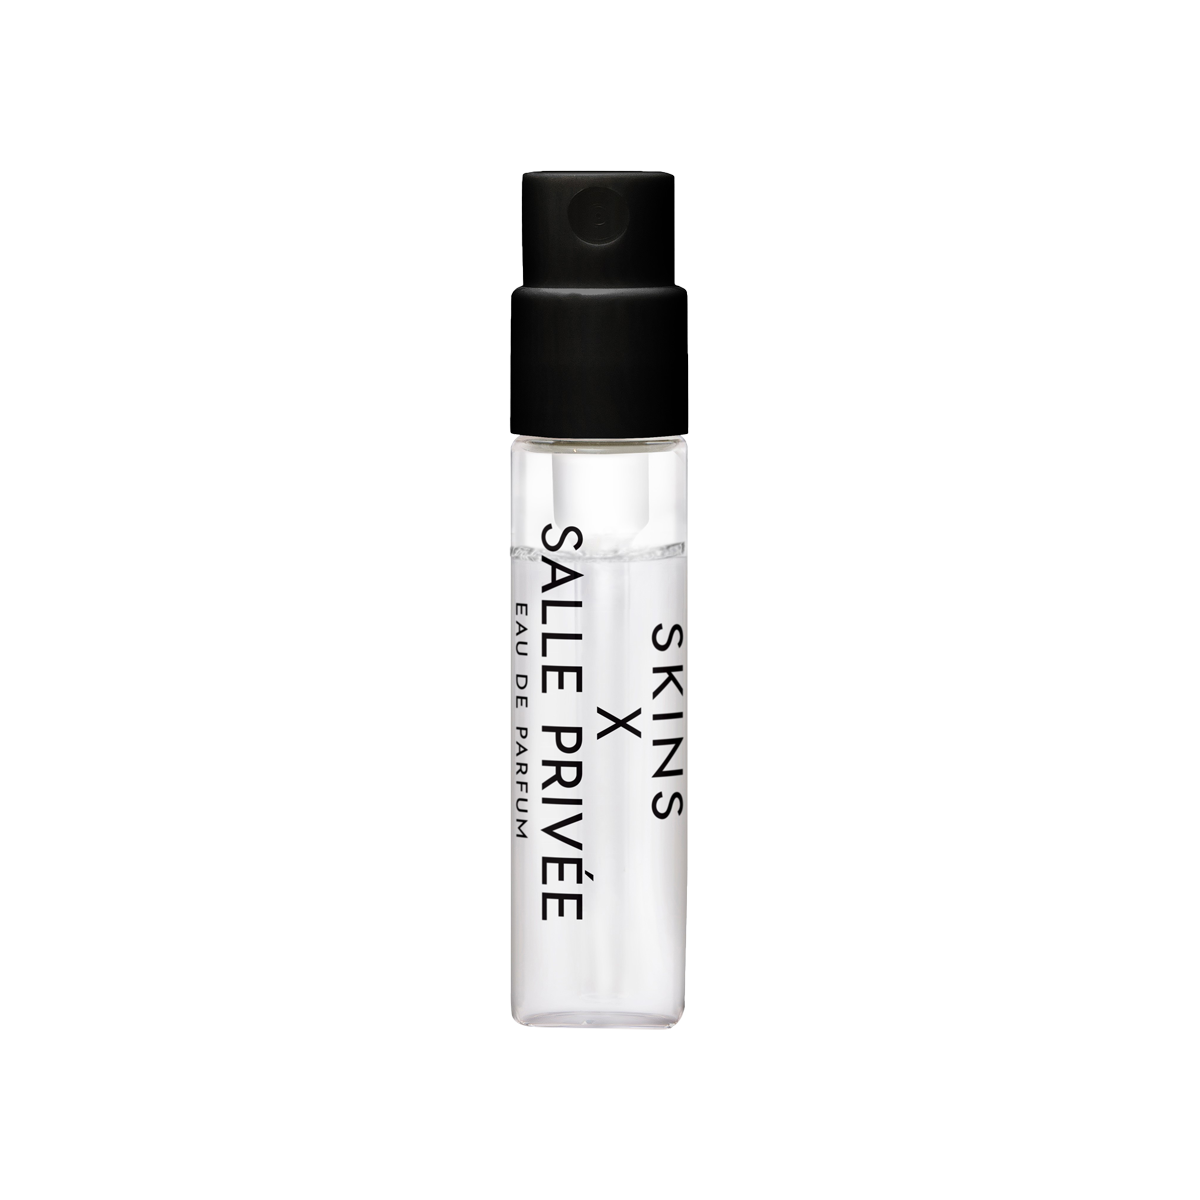 SALLE PRIVEE - SKINS x SALLE PRIVEE Eau de Parfum